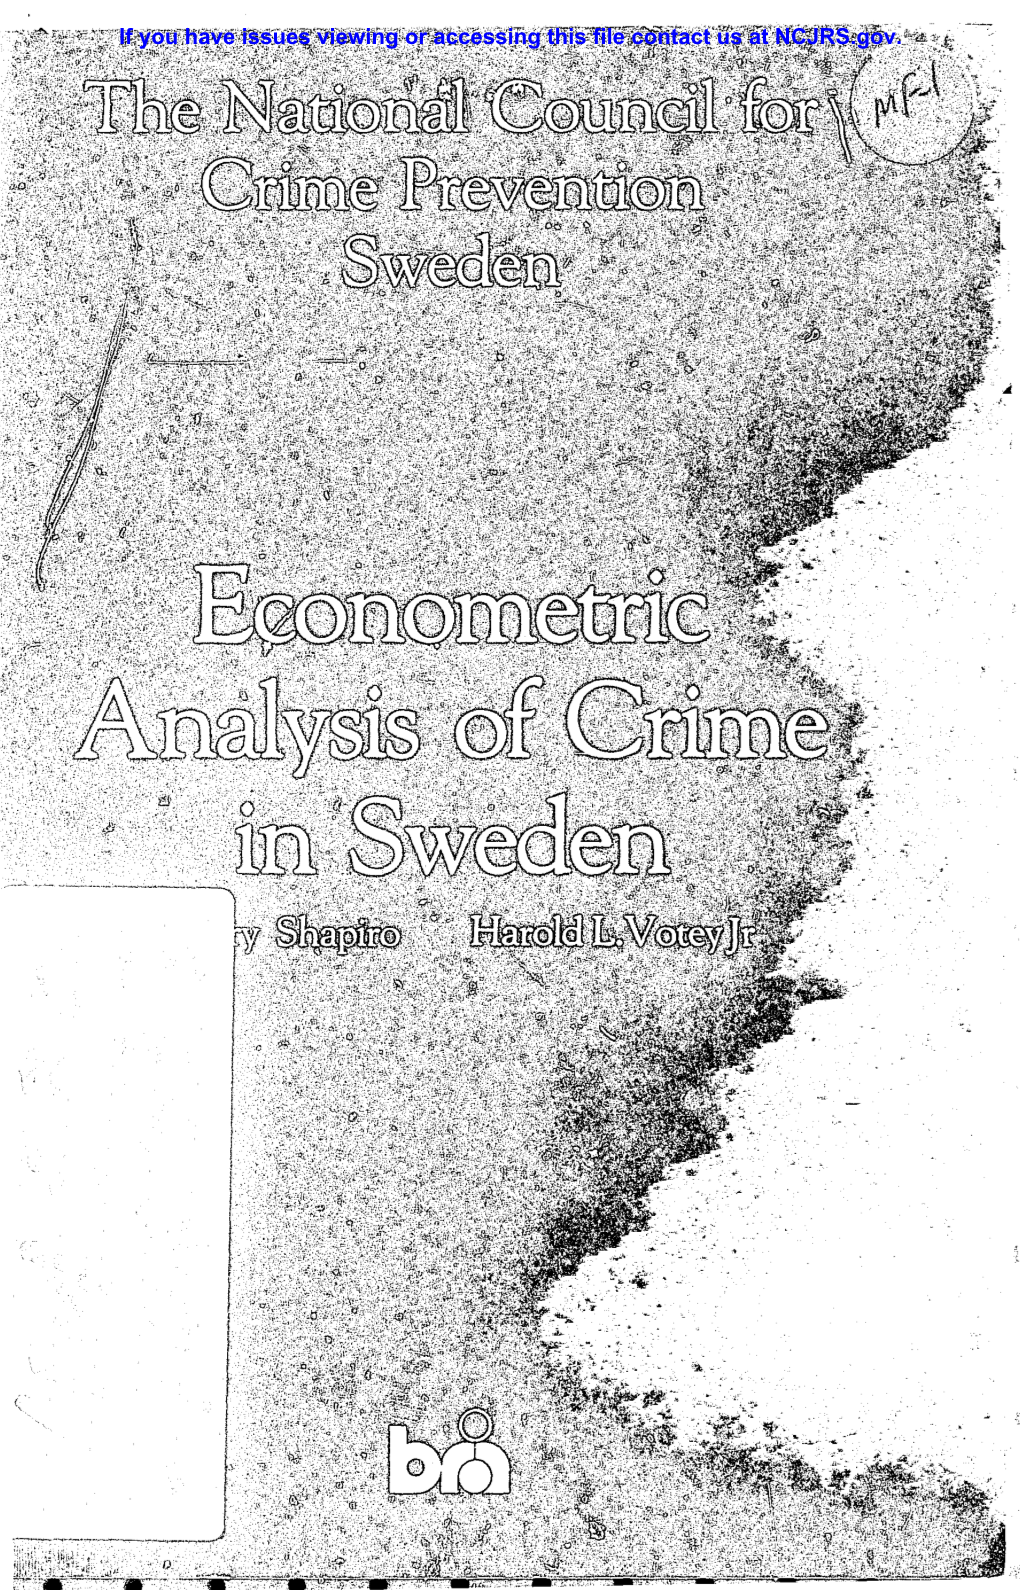 Econometric Analysis of Crime in Sweden